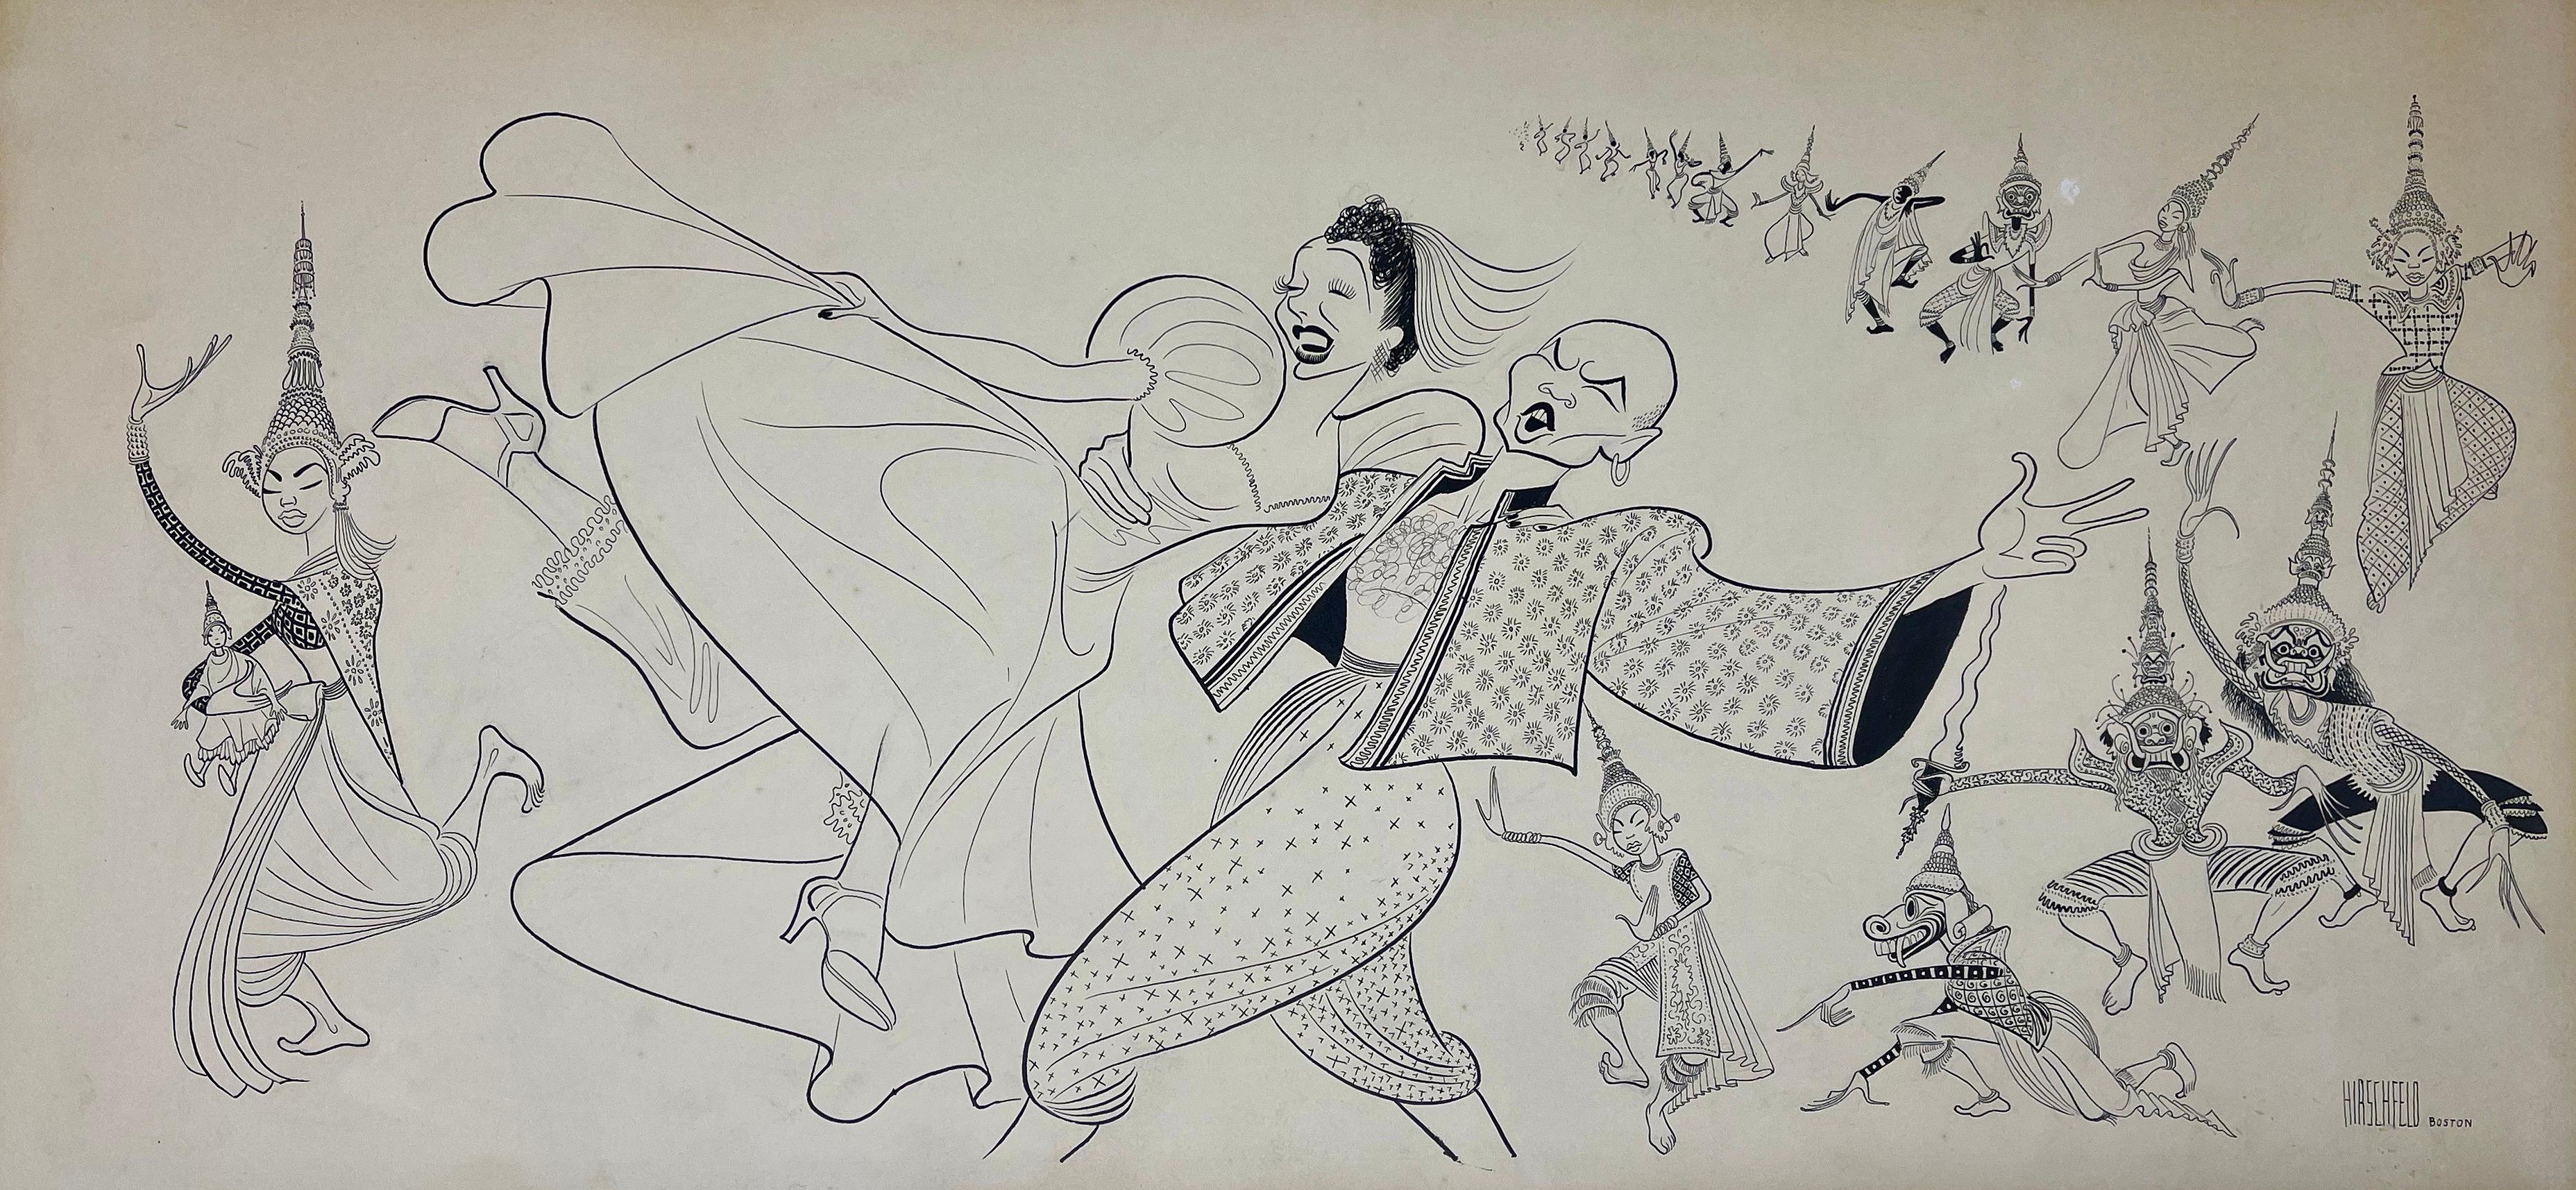 Albert Al Hirschfeld Figurative Art - "King & I" Orig 1951 Broadway Drawing Published NYT Tony Awards Mid 20th Century